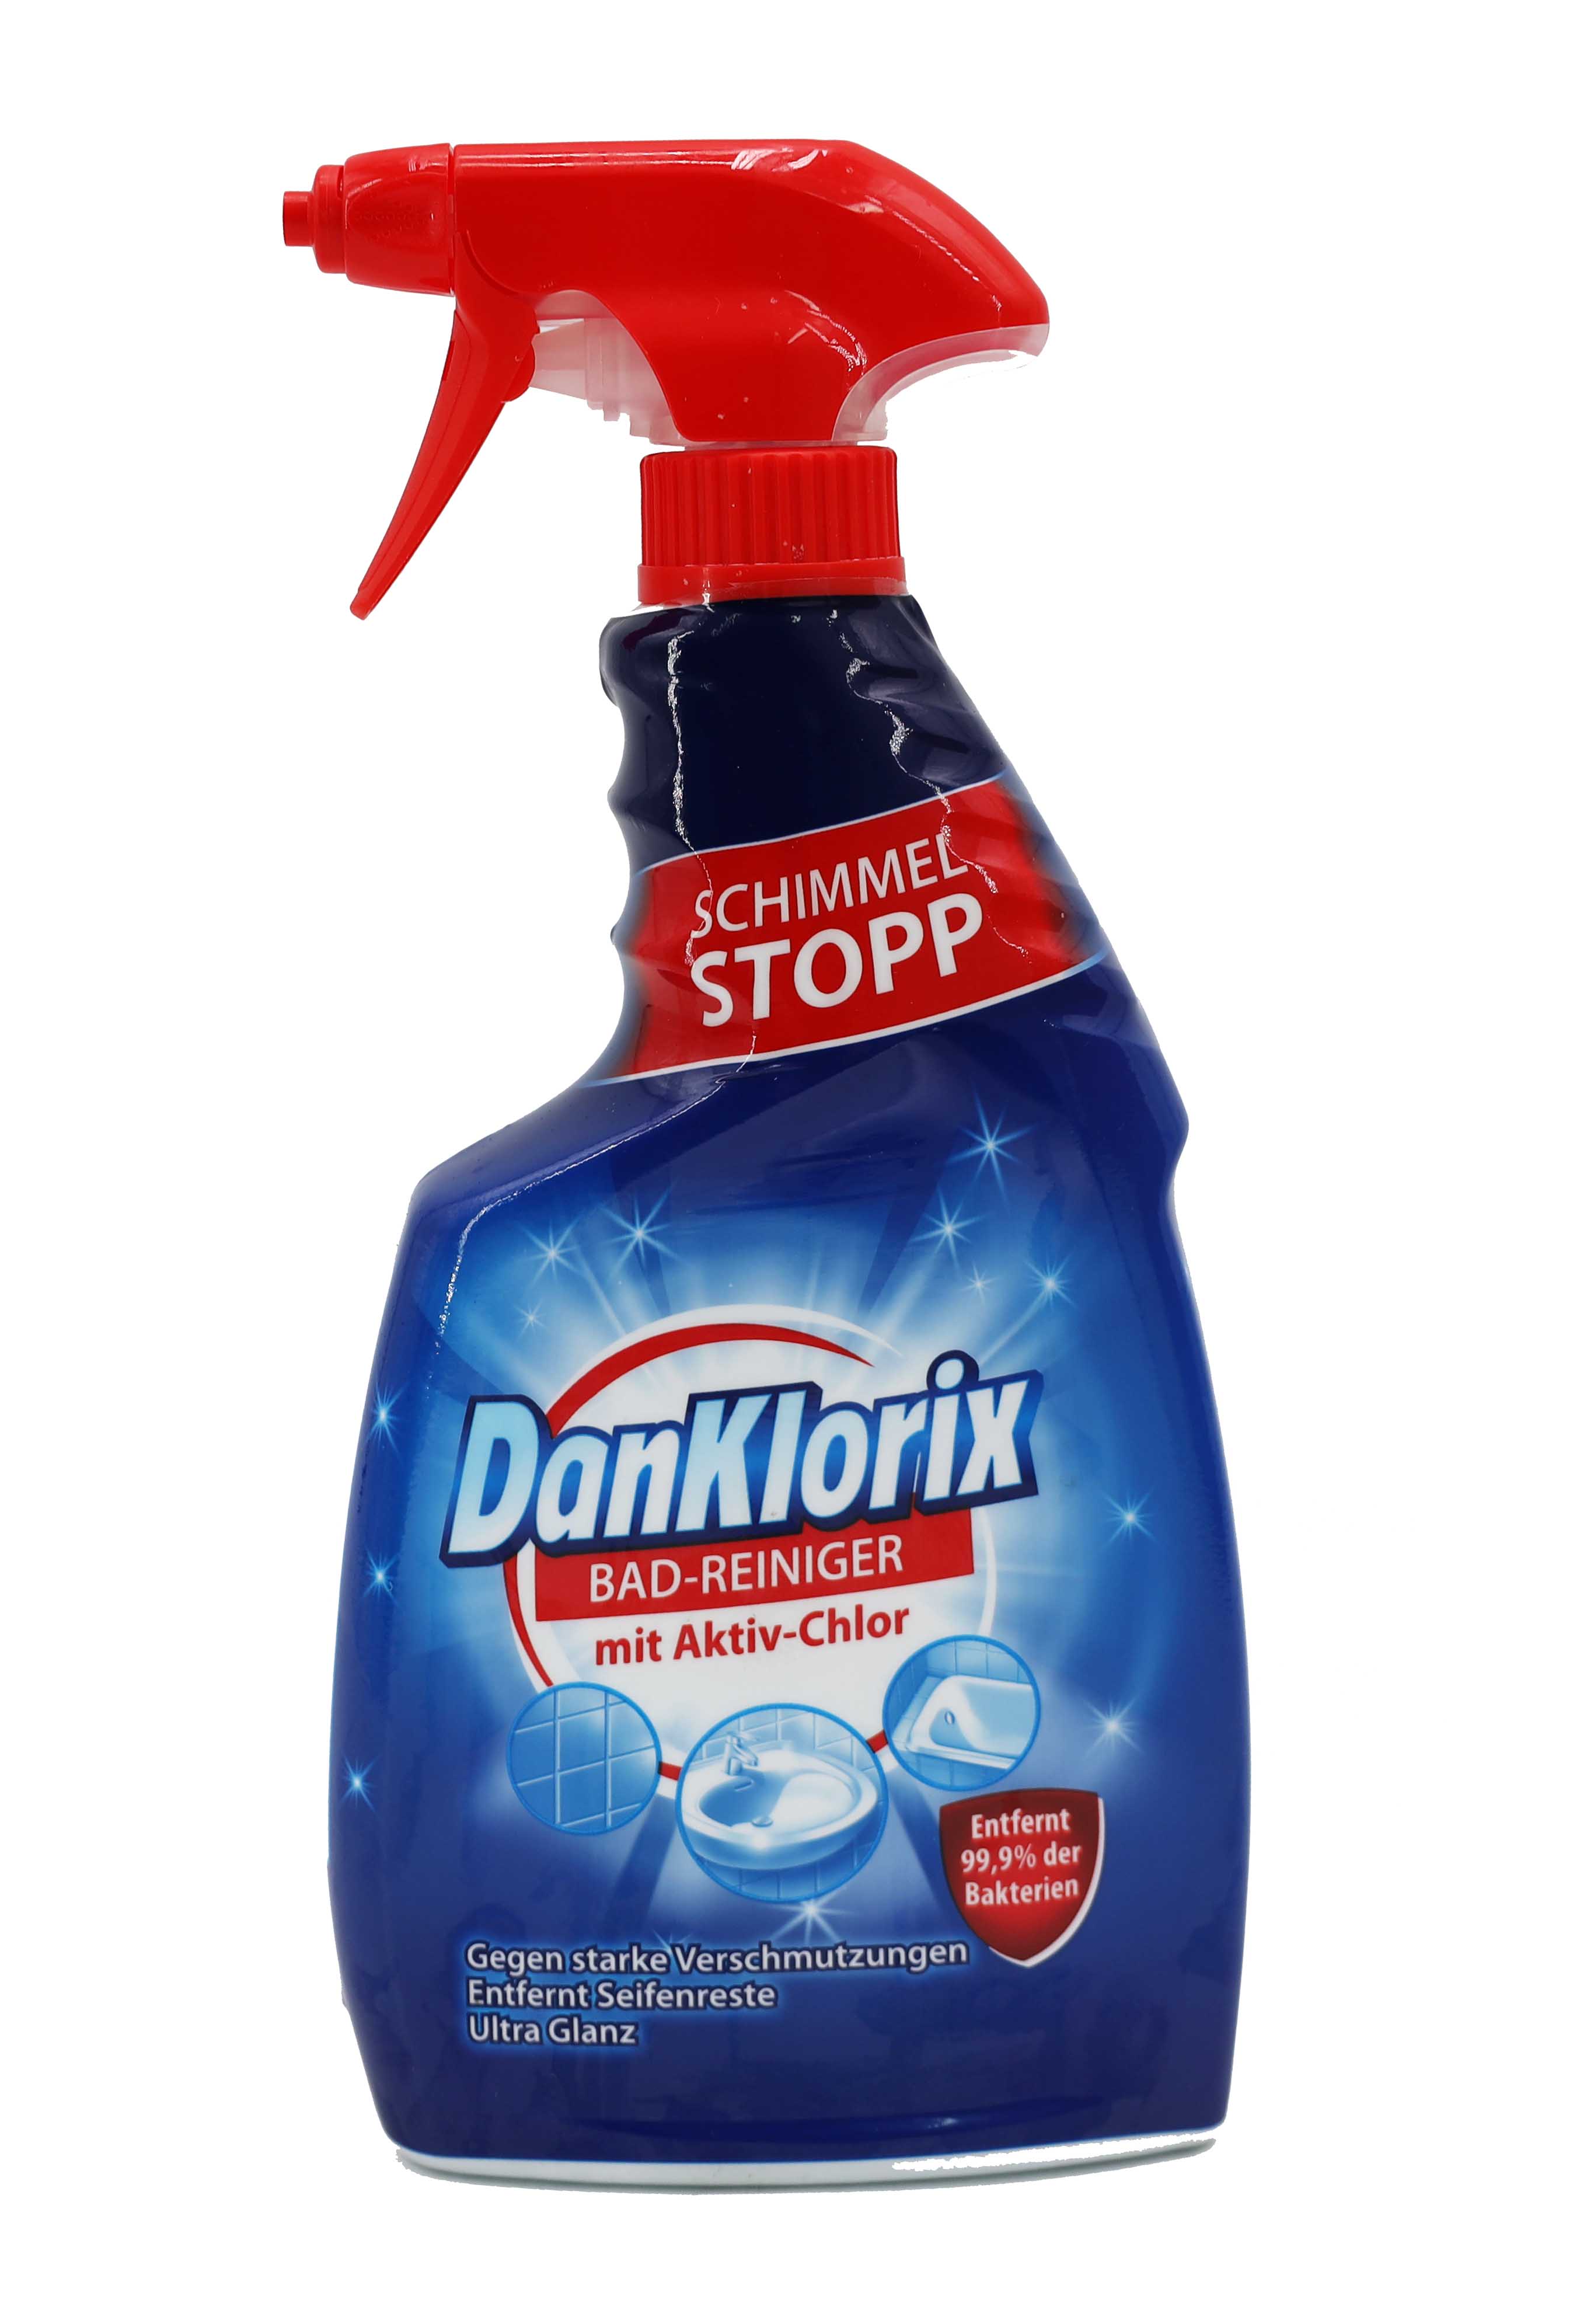 DanKlorix Bad-Reiniger Aktiv-Chlor Schimmel Stopp Spray 750ml